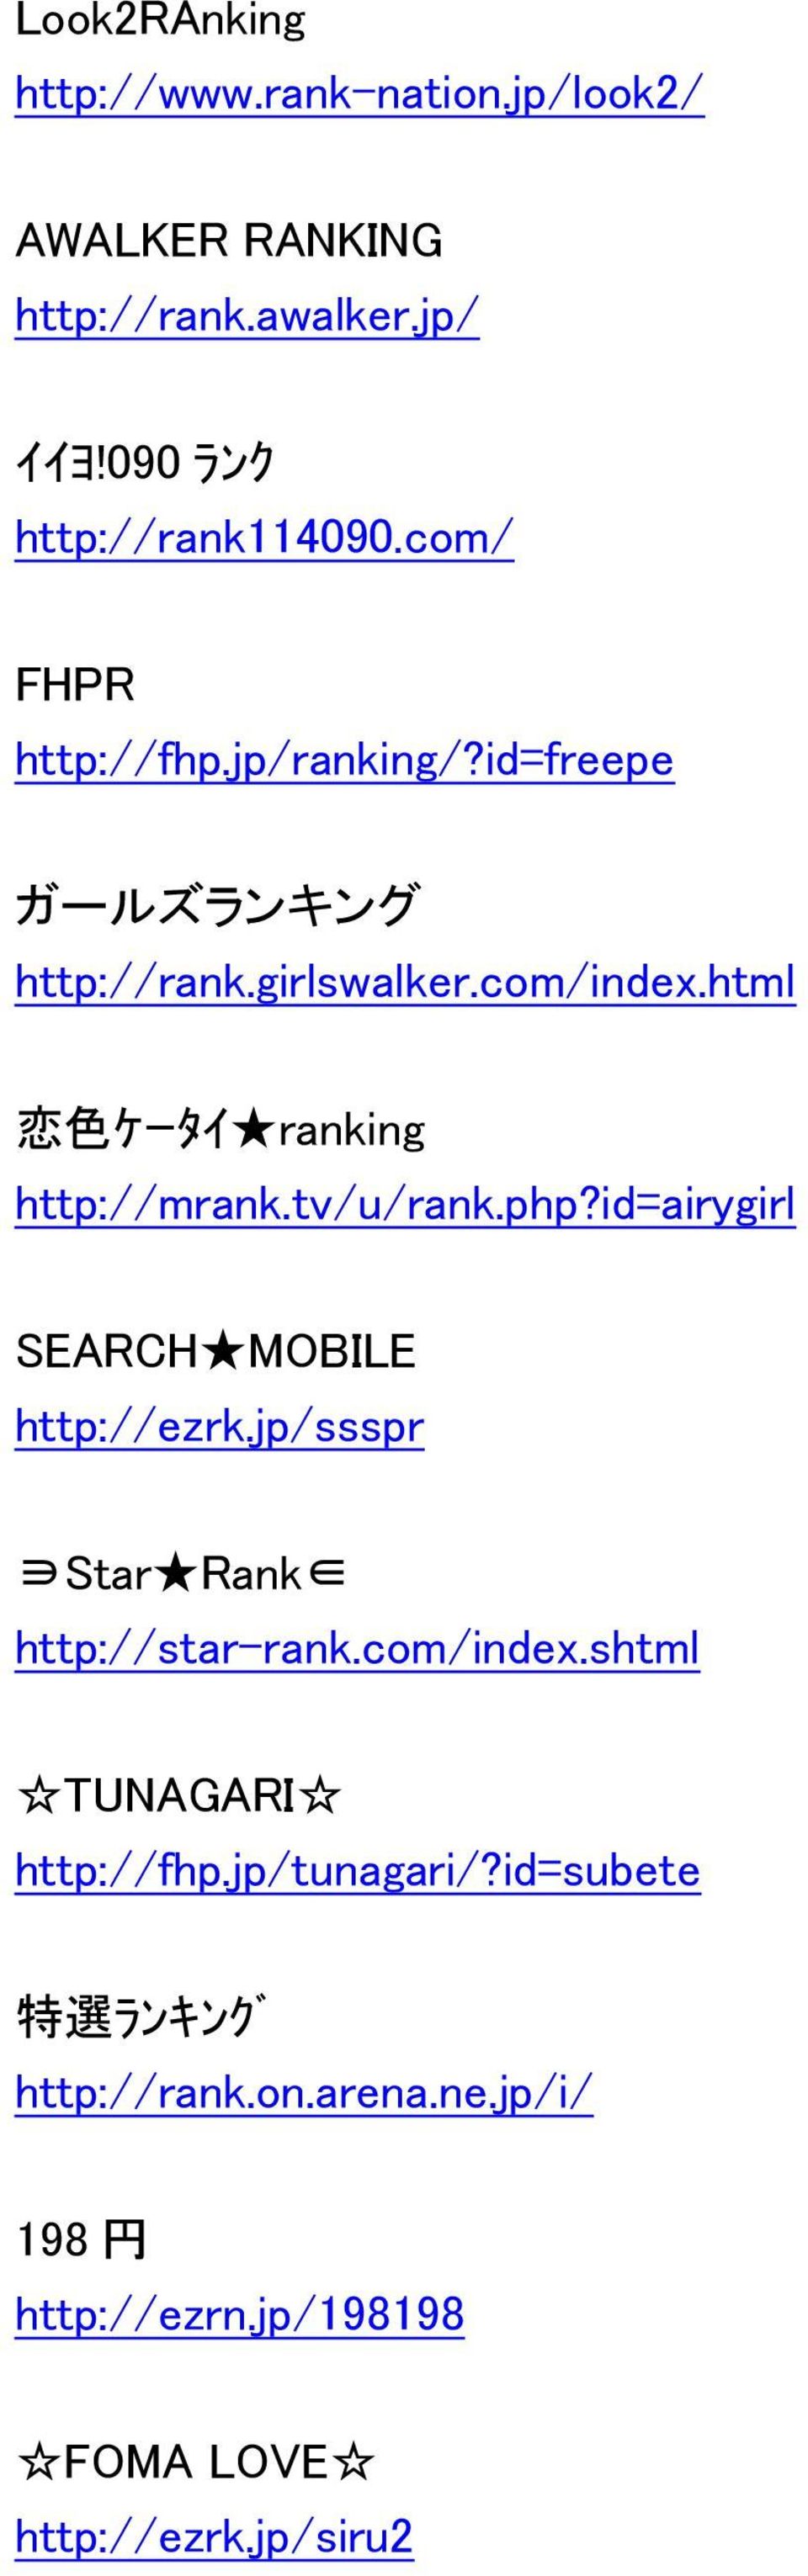 html 恋 色 ケータイ ranking http://mrank.tv/u/rank.php?id=airygirl SEARCH MOBILE http://ezrk.